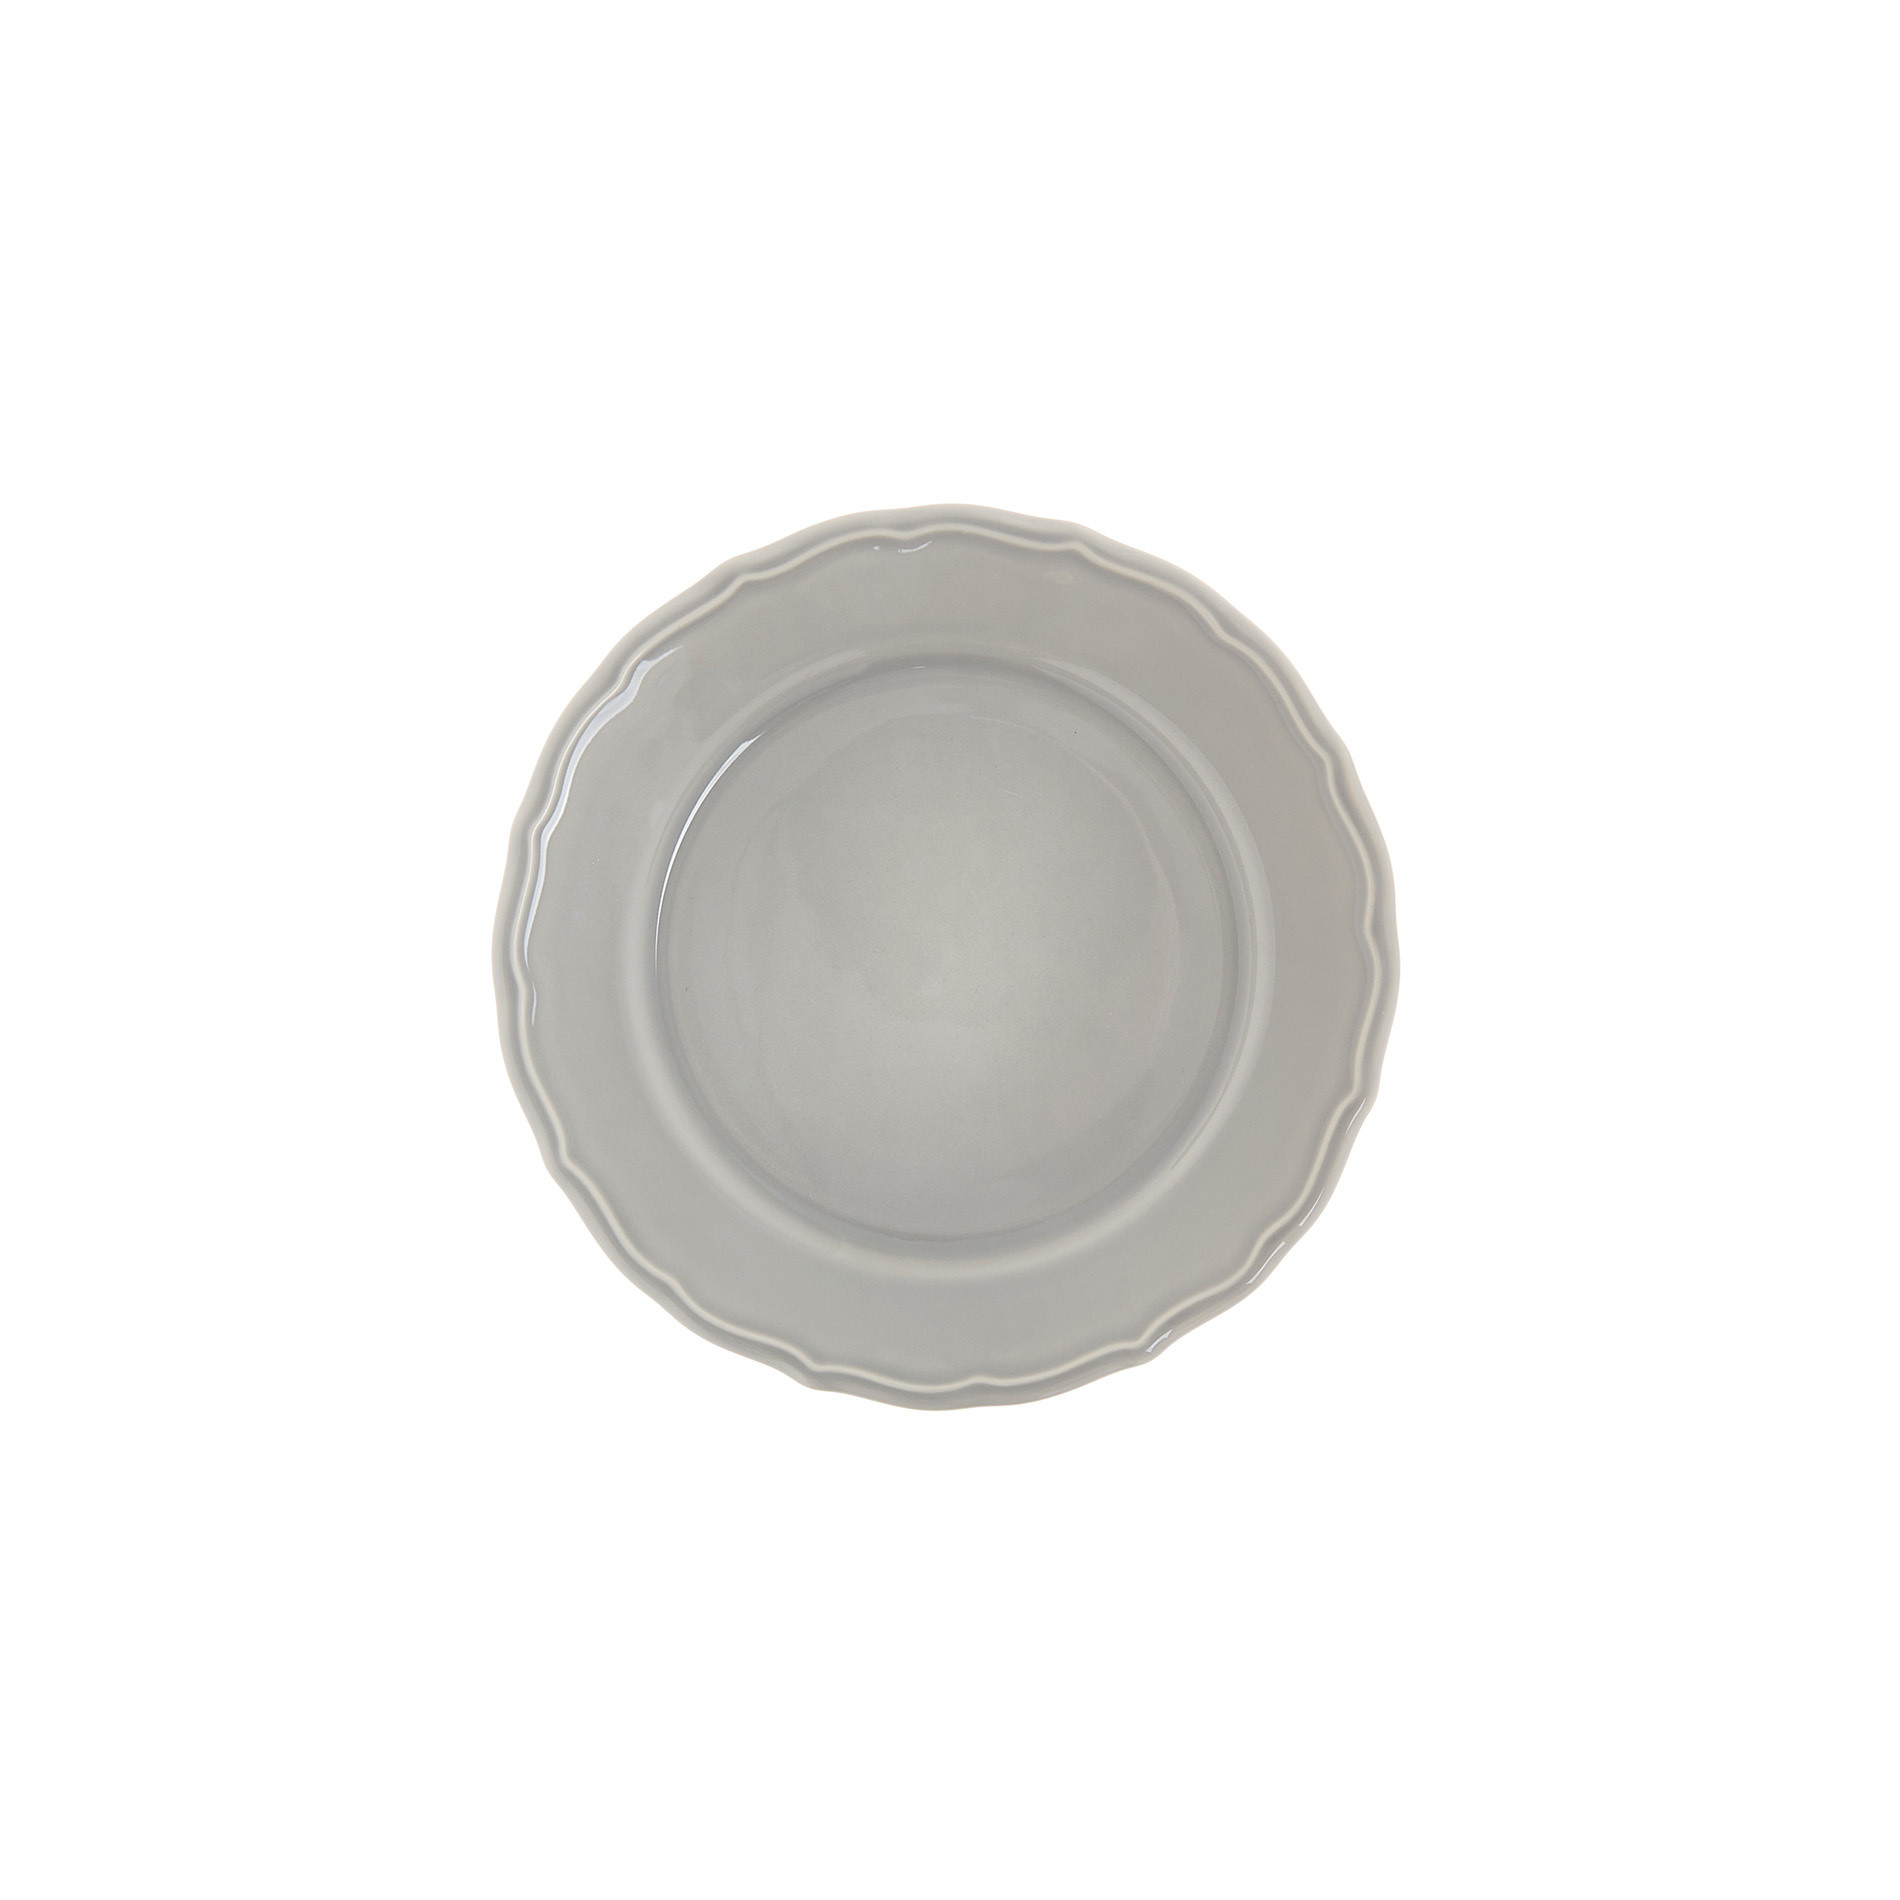 Dona Maria ceramic side plate, Grey, large image number 0